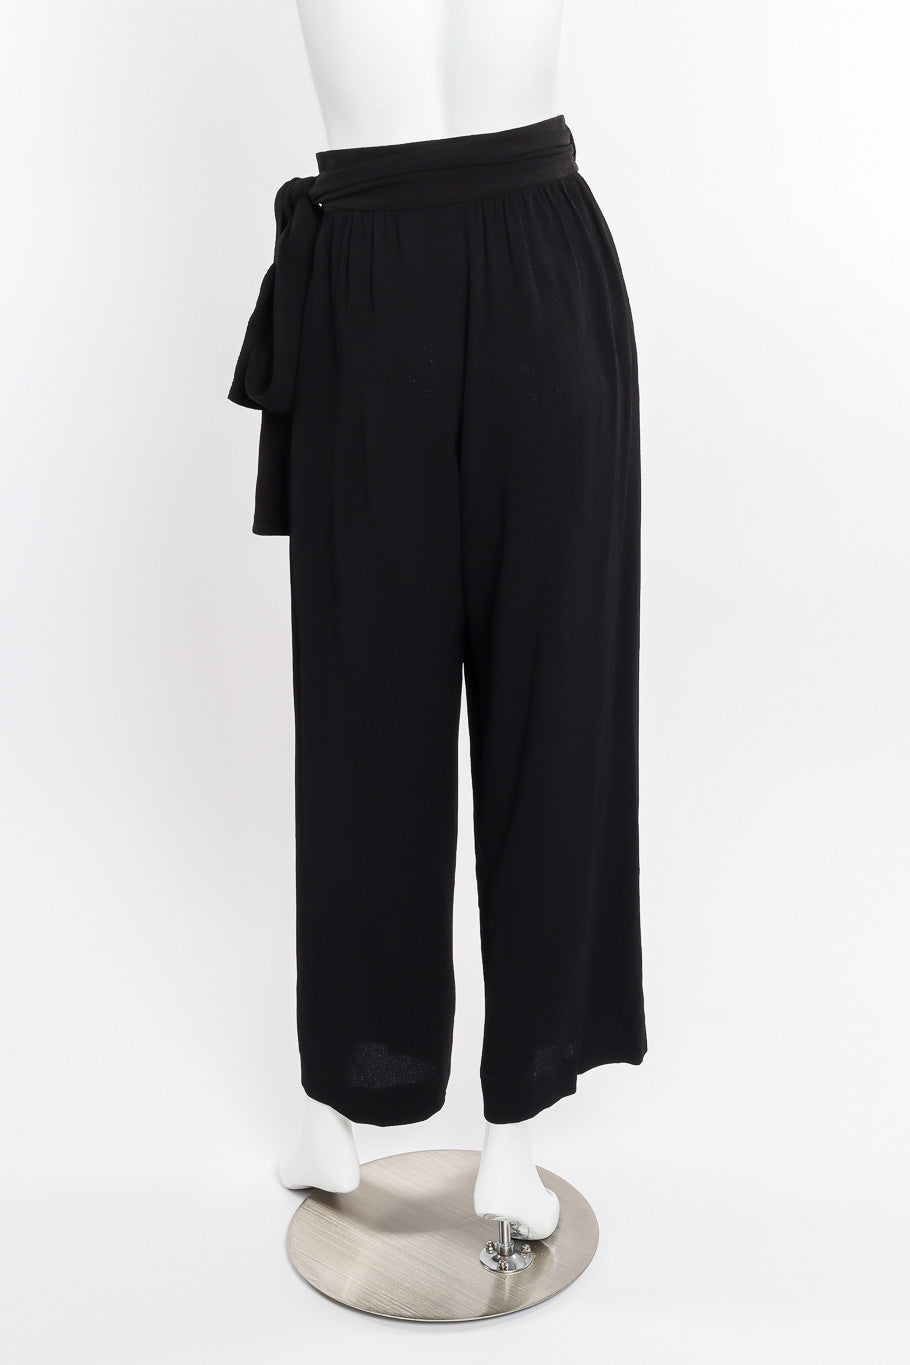 Wrap trouser by Yves Saint Laurent on mannequin back @recessla